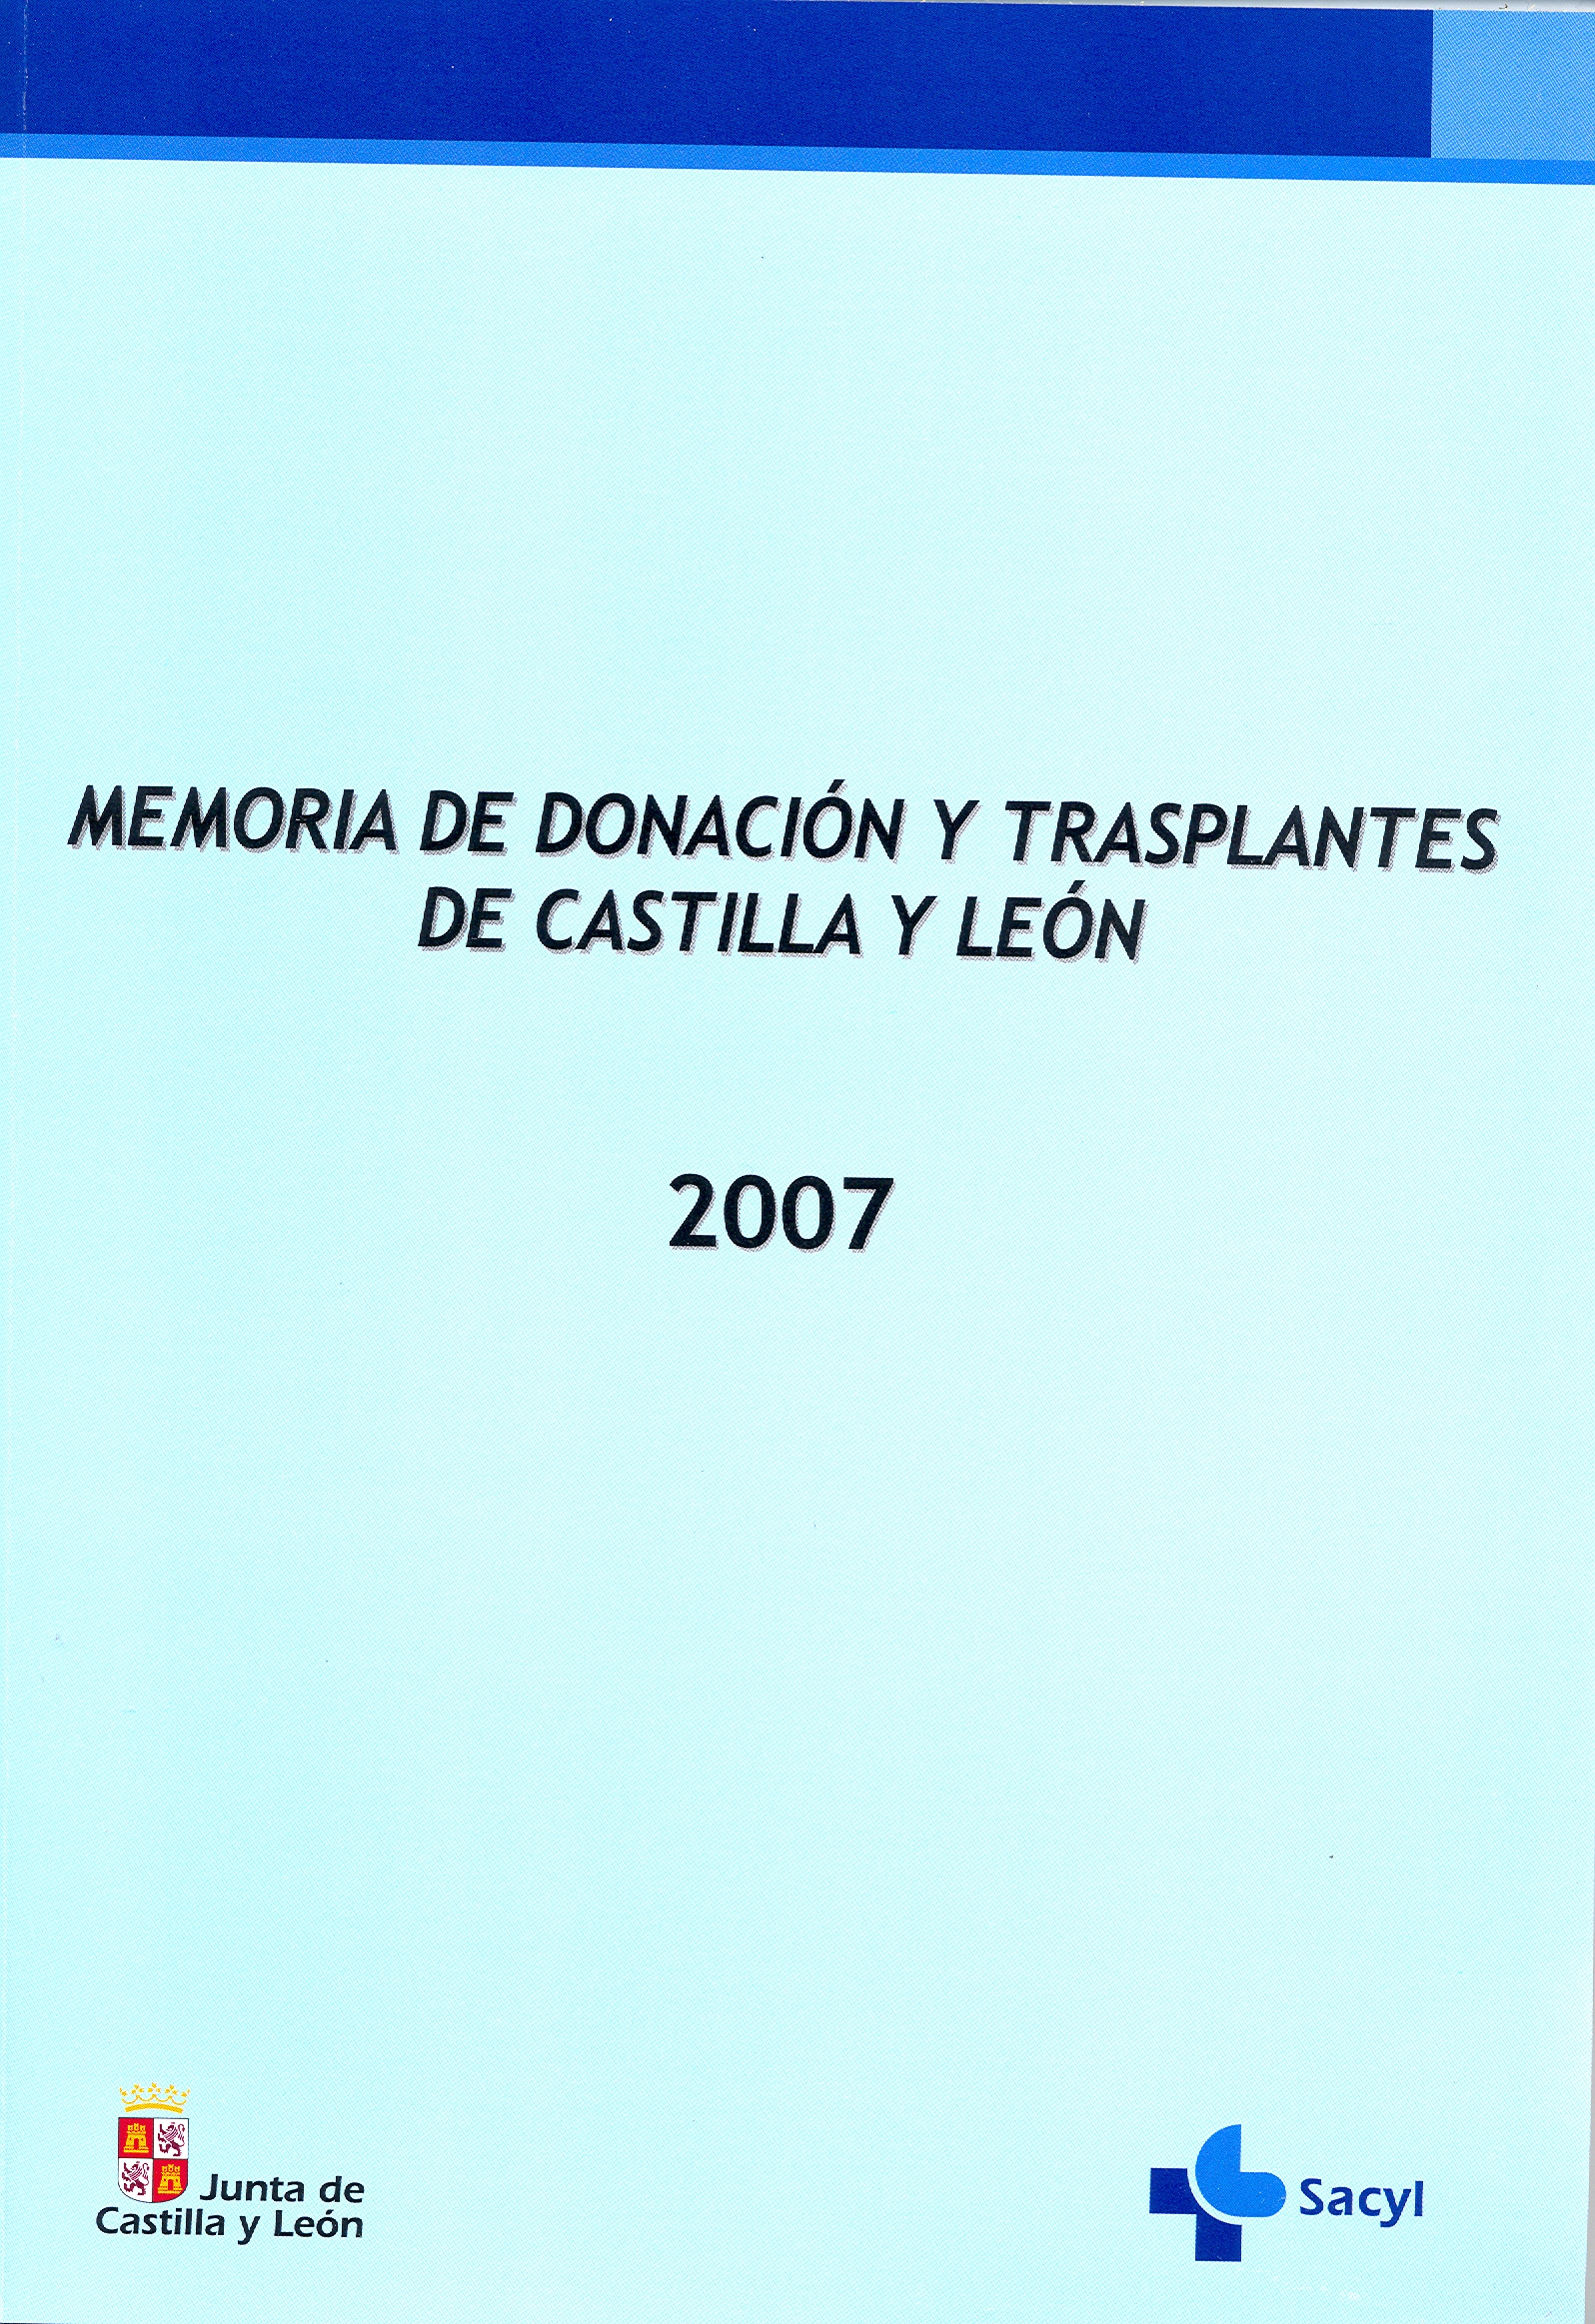 Memoria transpalntes2007